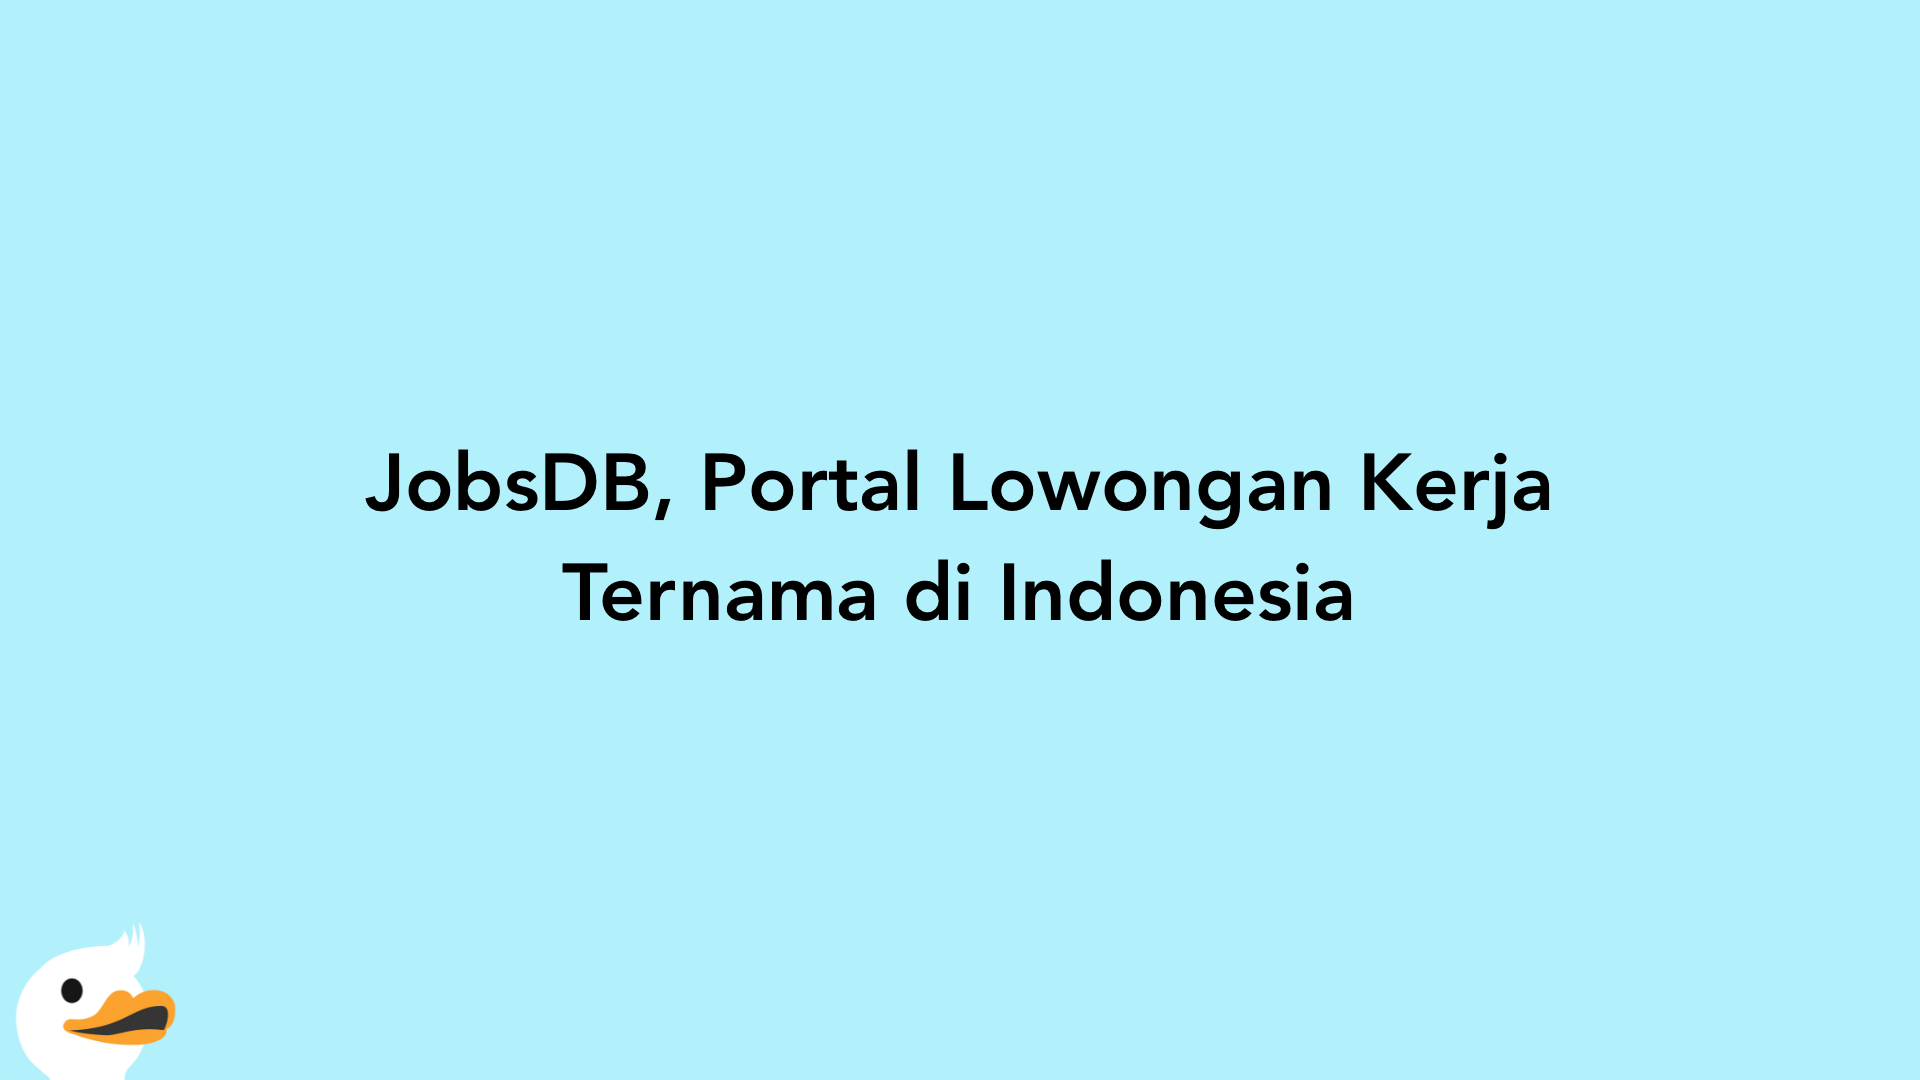 JobsDB, Portal Lowongan Kerja Ternama di Indonesia